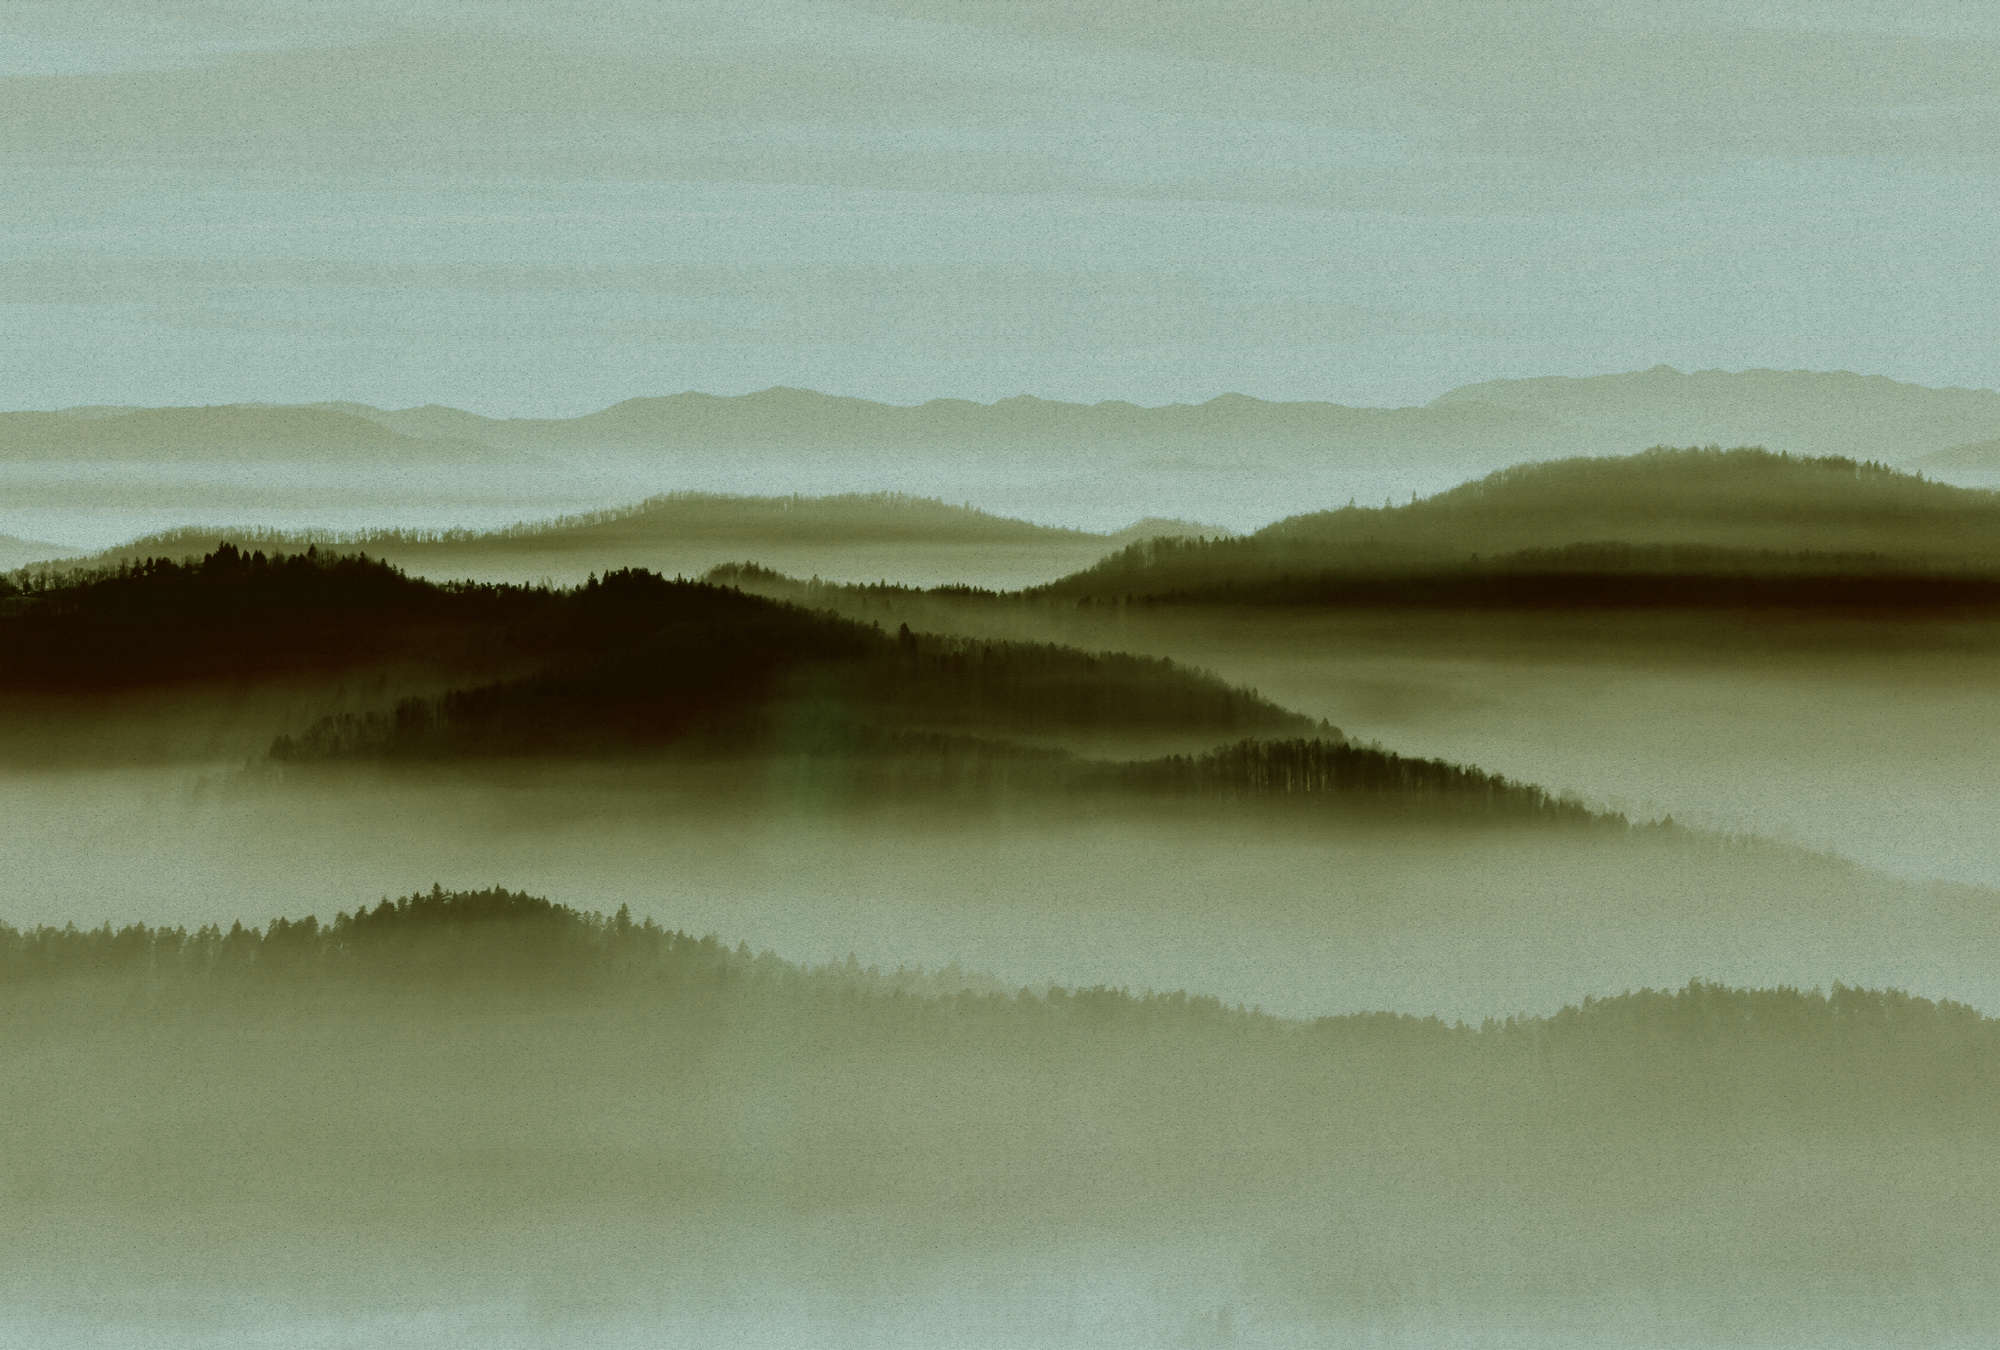             Horizon 2 - Cardboard Structured Wallpaper with Fog Landscape, Nature Sky Line - Beige, Green | Matt Smooth Non-woven
        